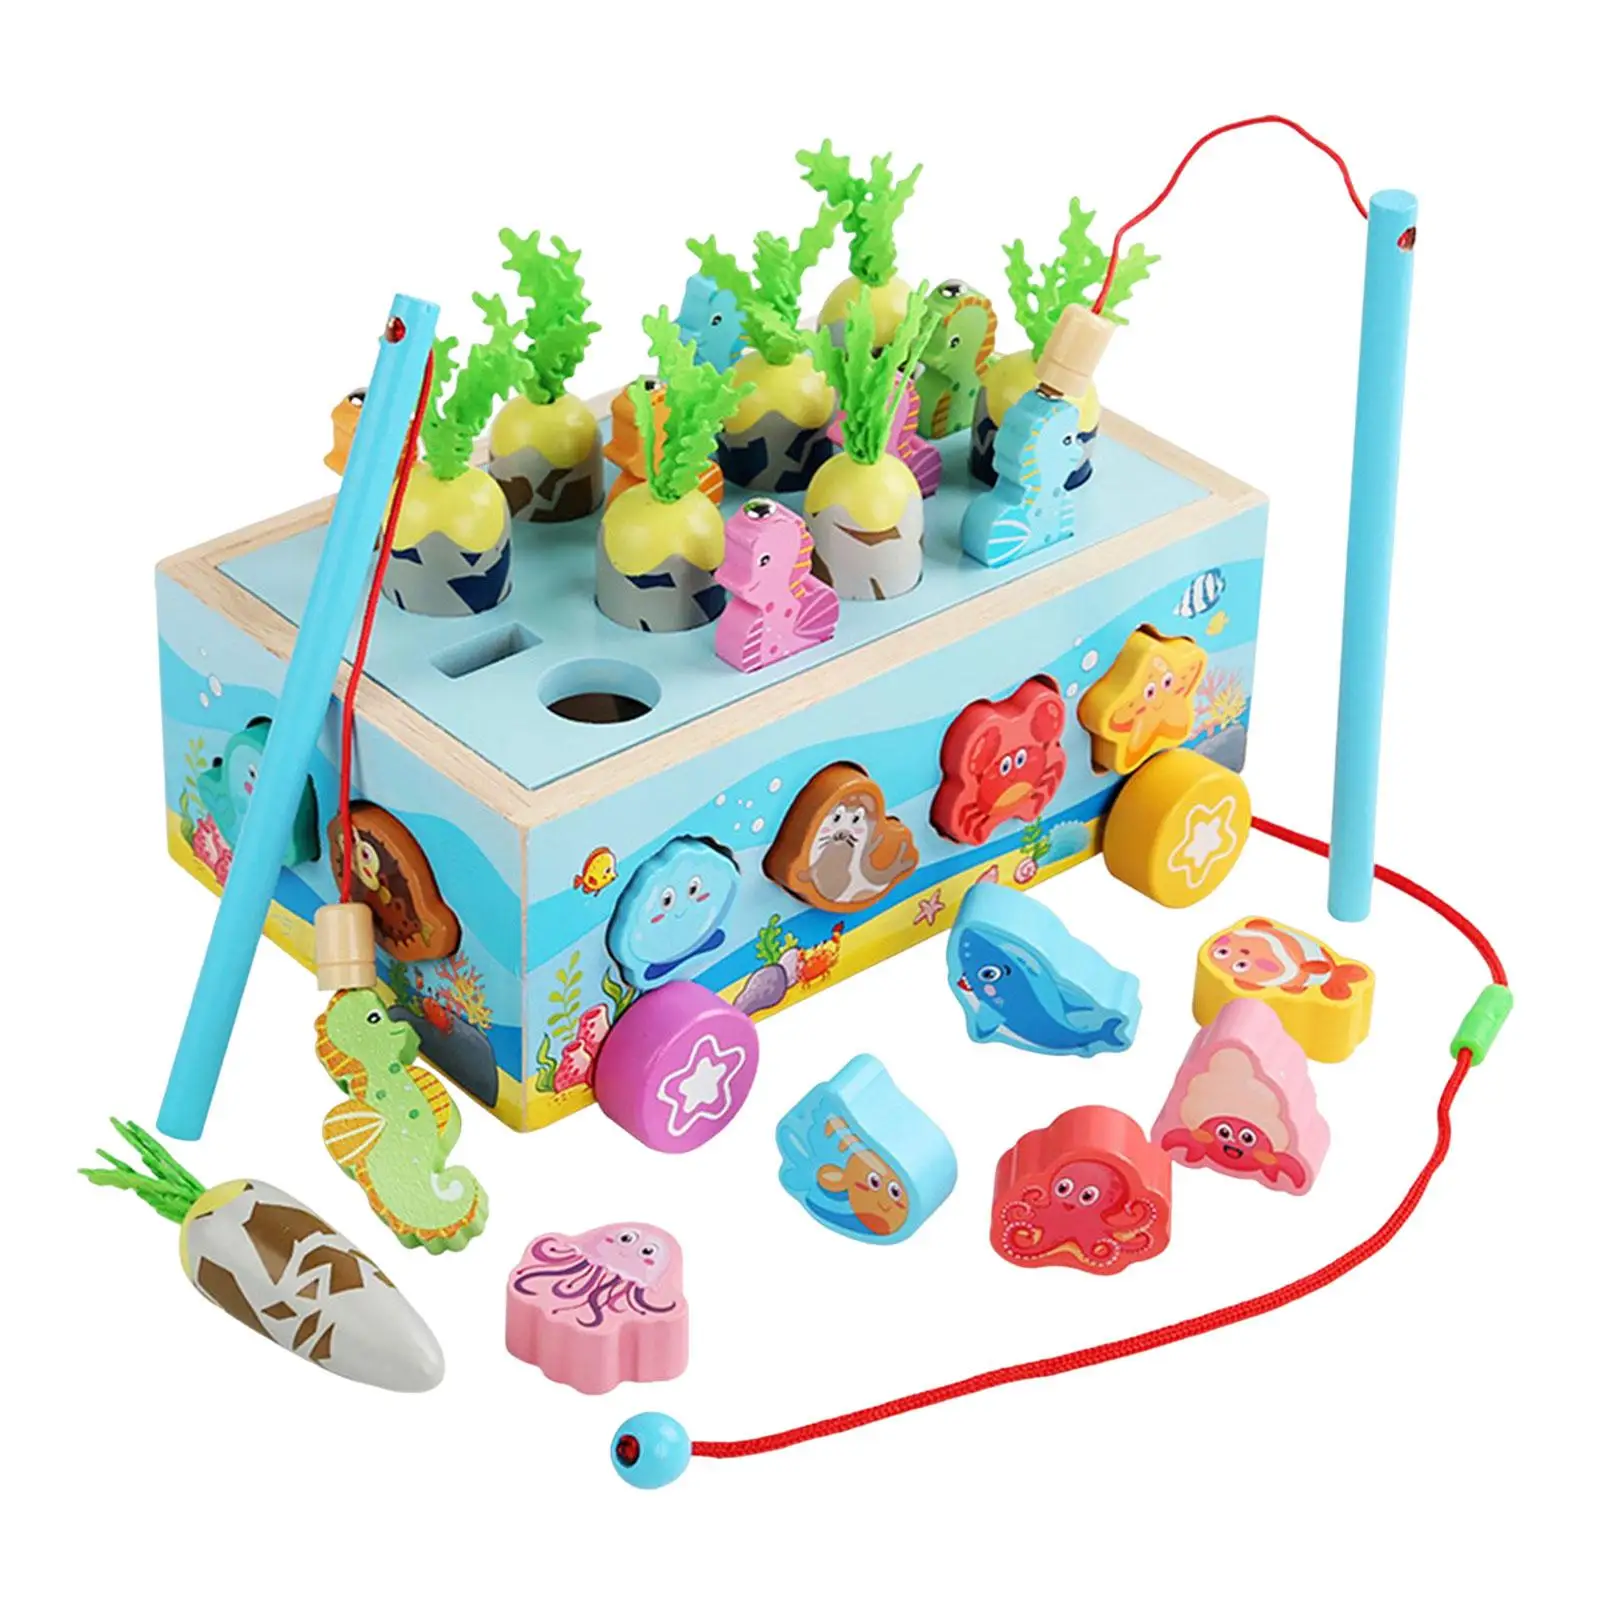 Montessori Wooden Shape Sorter Toys Educational Toys Fine Motor Skills Fishing Game Car with Animal Blocks for Girls Boys Gift